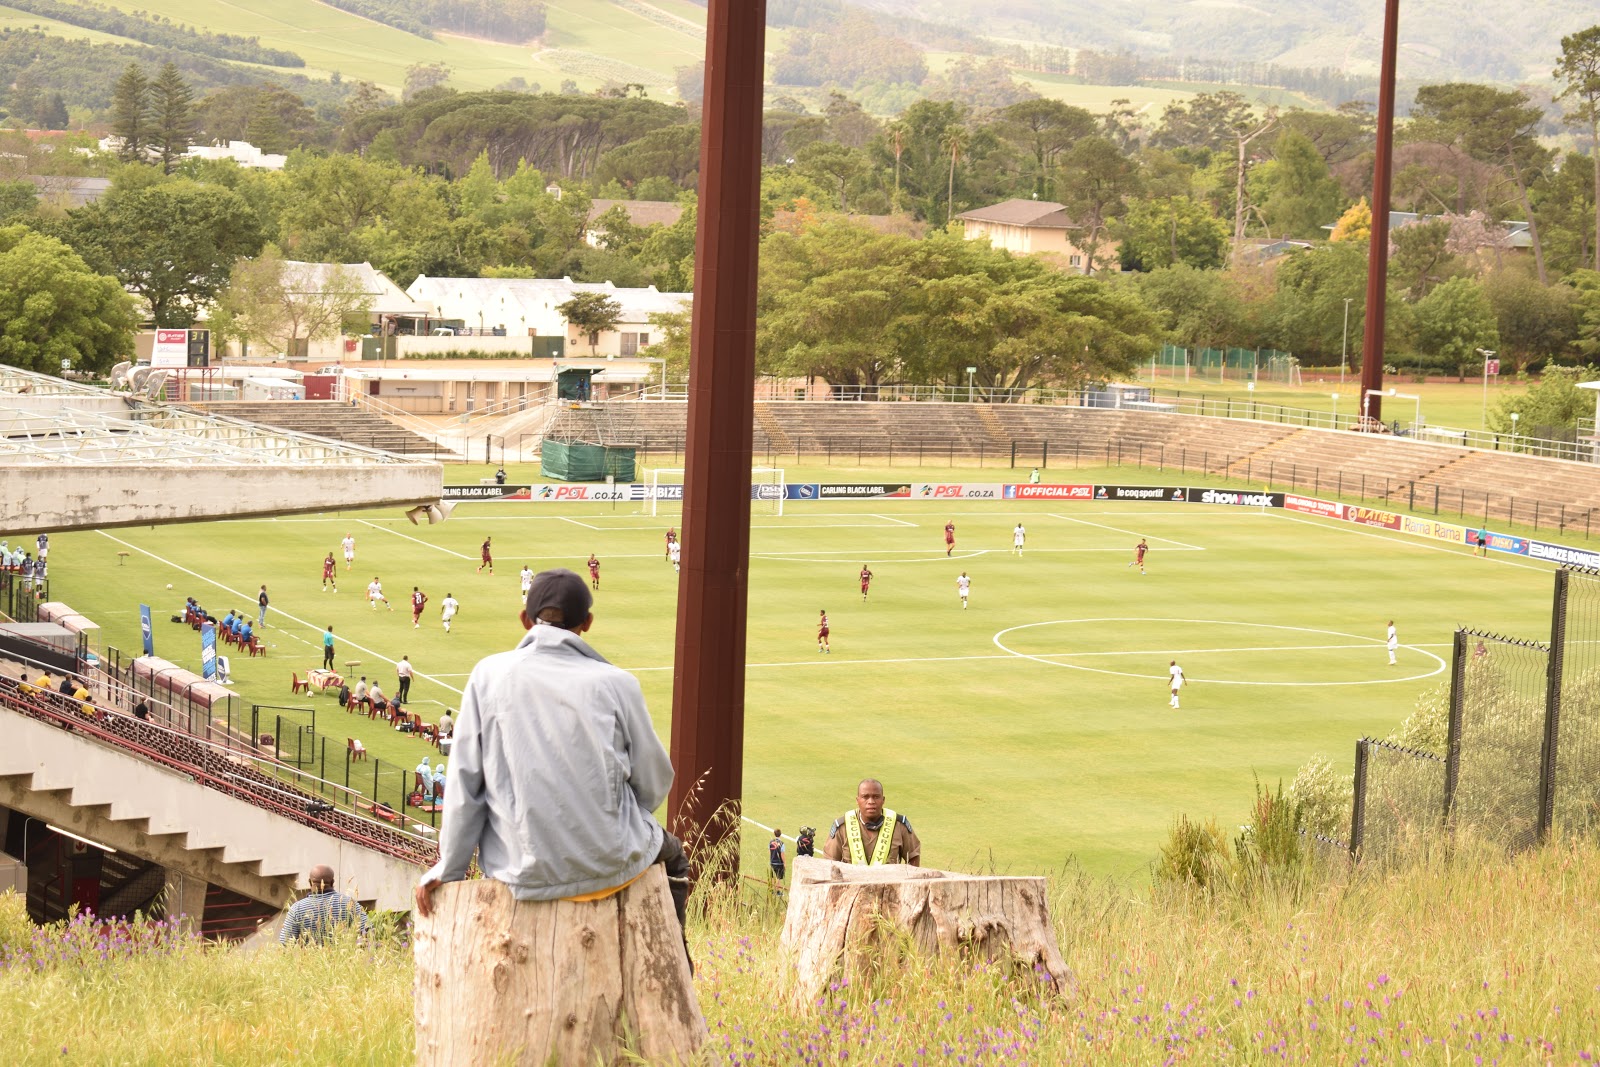 Spectators were not allowed inside the Danie Craven Stadium for the match against Stellenbosch Football Club and Moroka Swallows Football Club